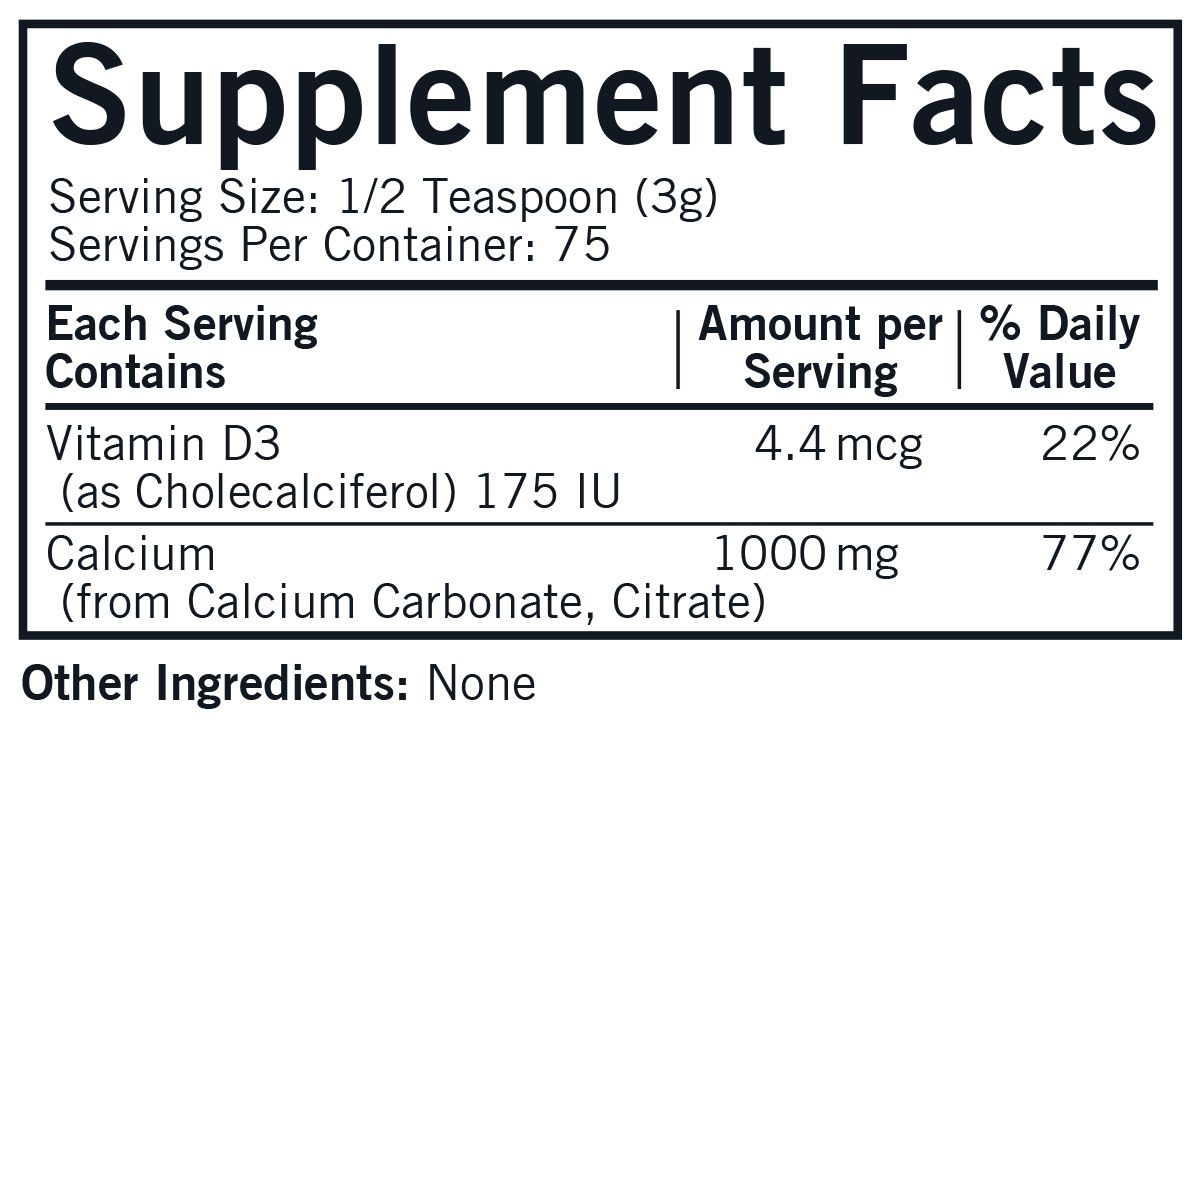 Calcium with Vitamin D-3 Powder - Unflavored - Hypoallergenic - 8 oz.